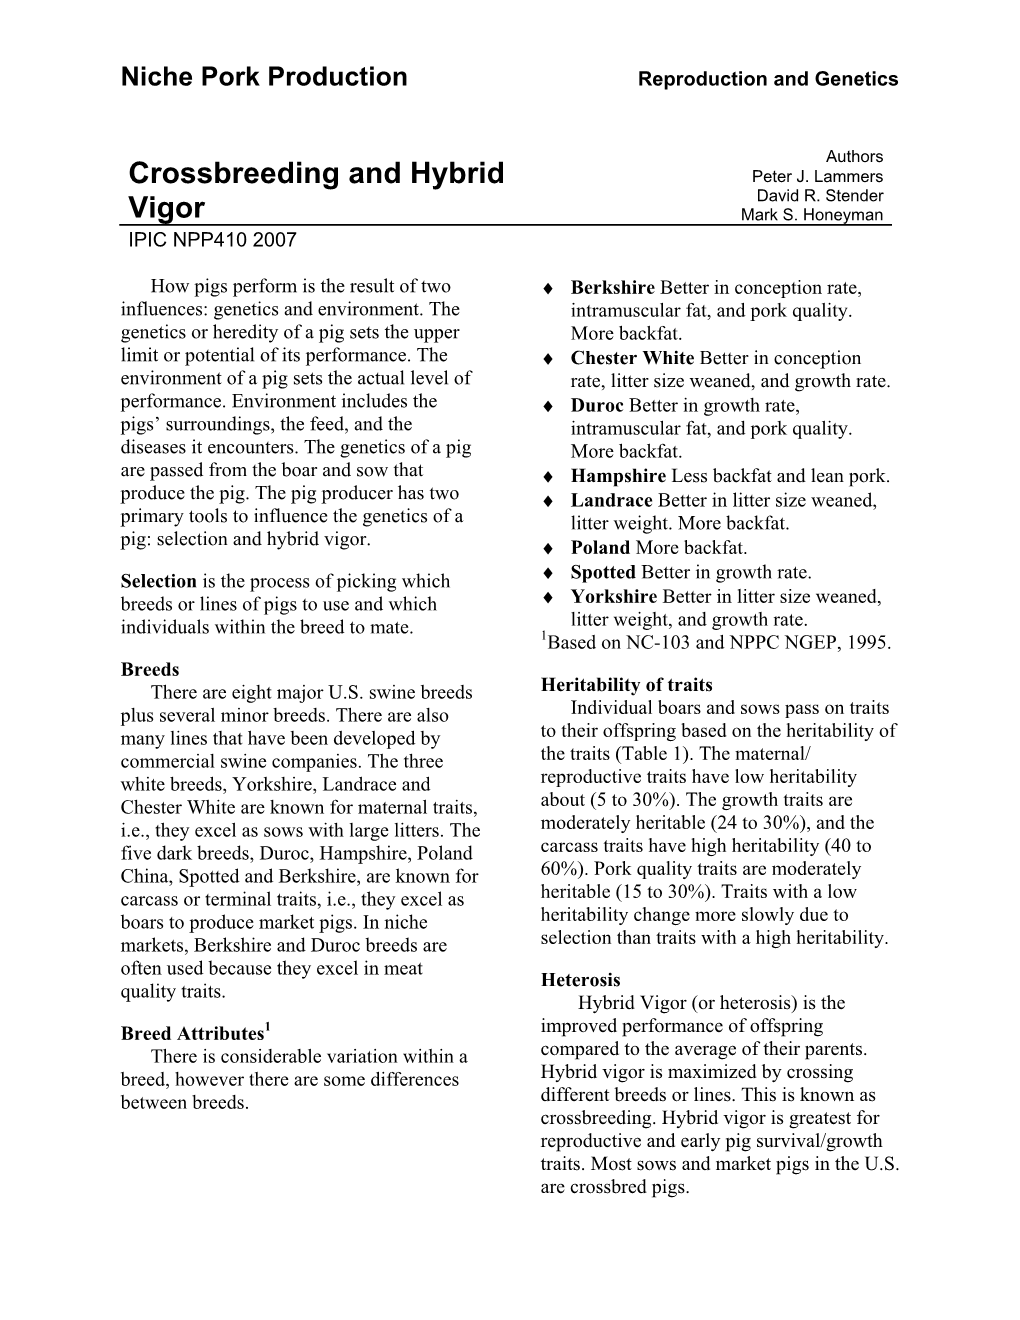 Crossbreeding and Hybrid Vigor